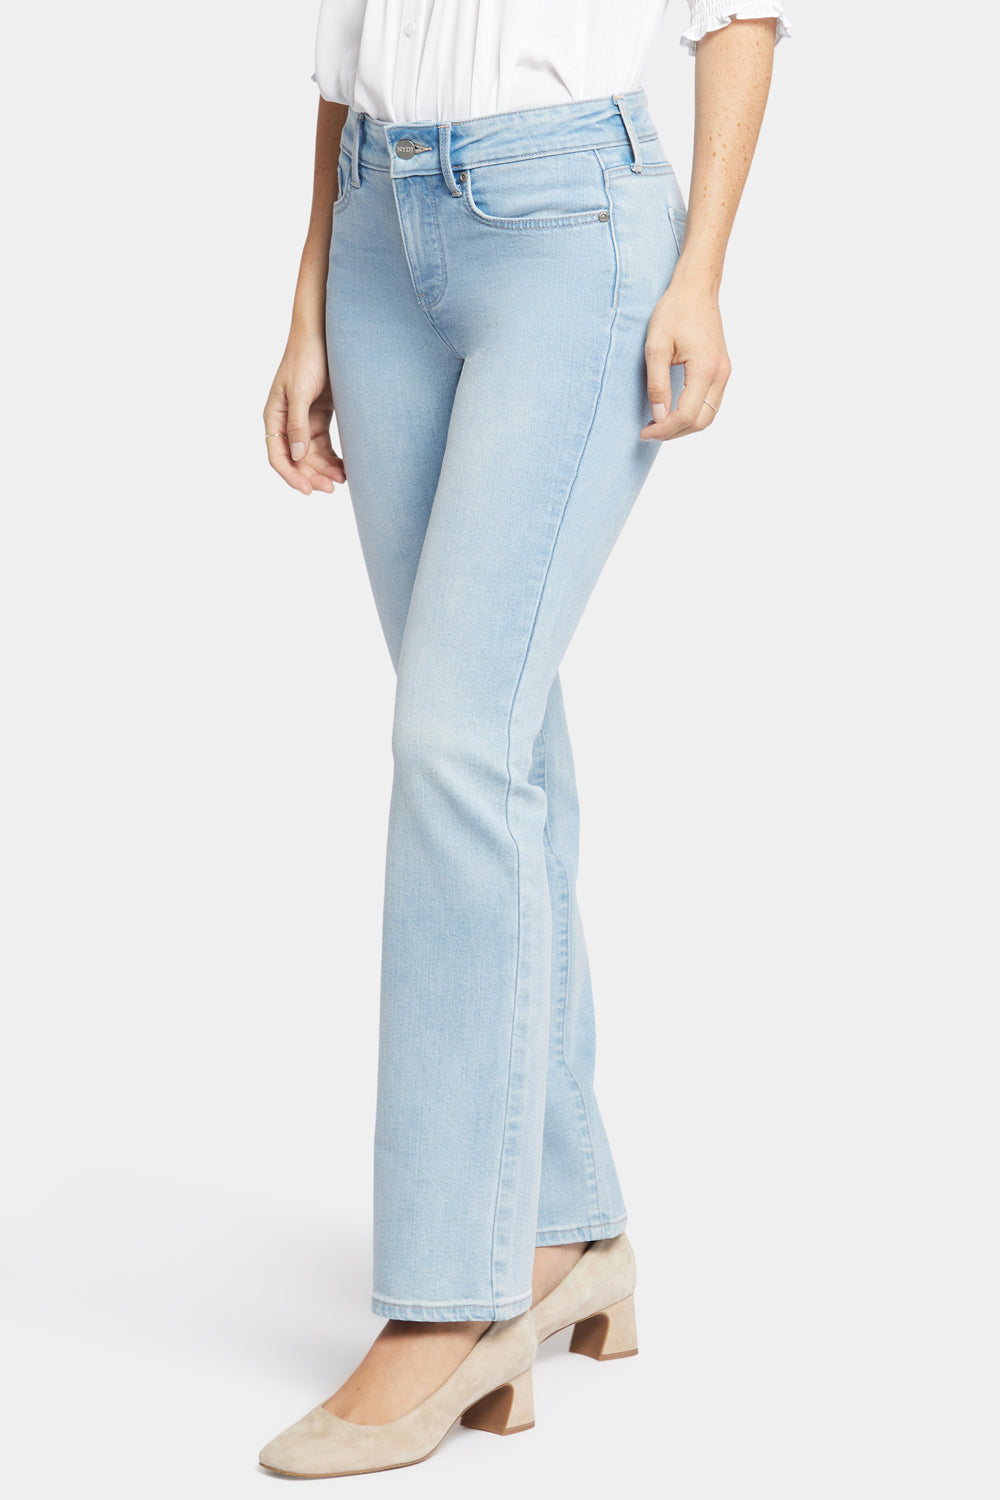 NYDJ Marilyn Straight Jeans  - Mojave